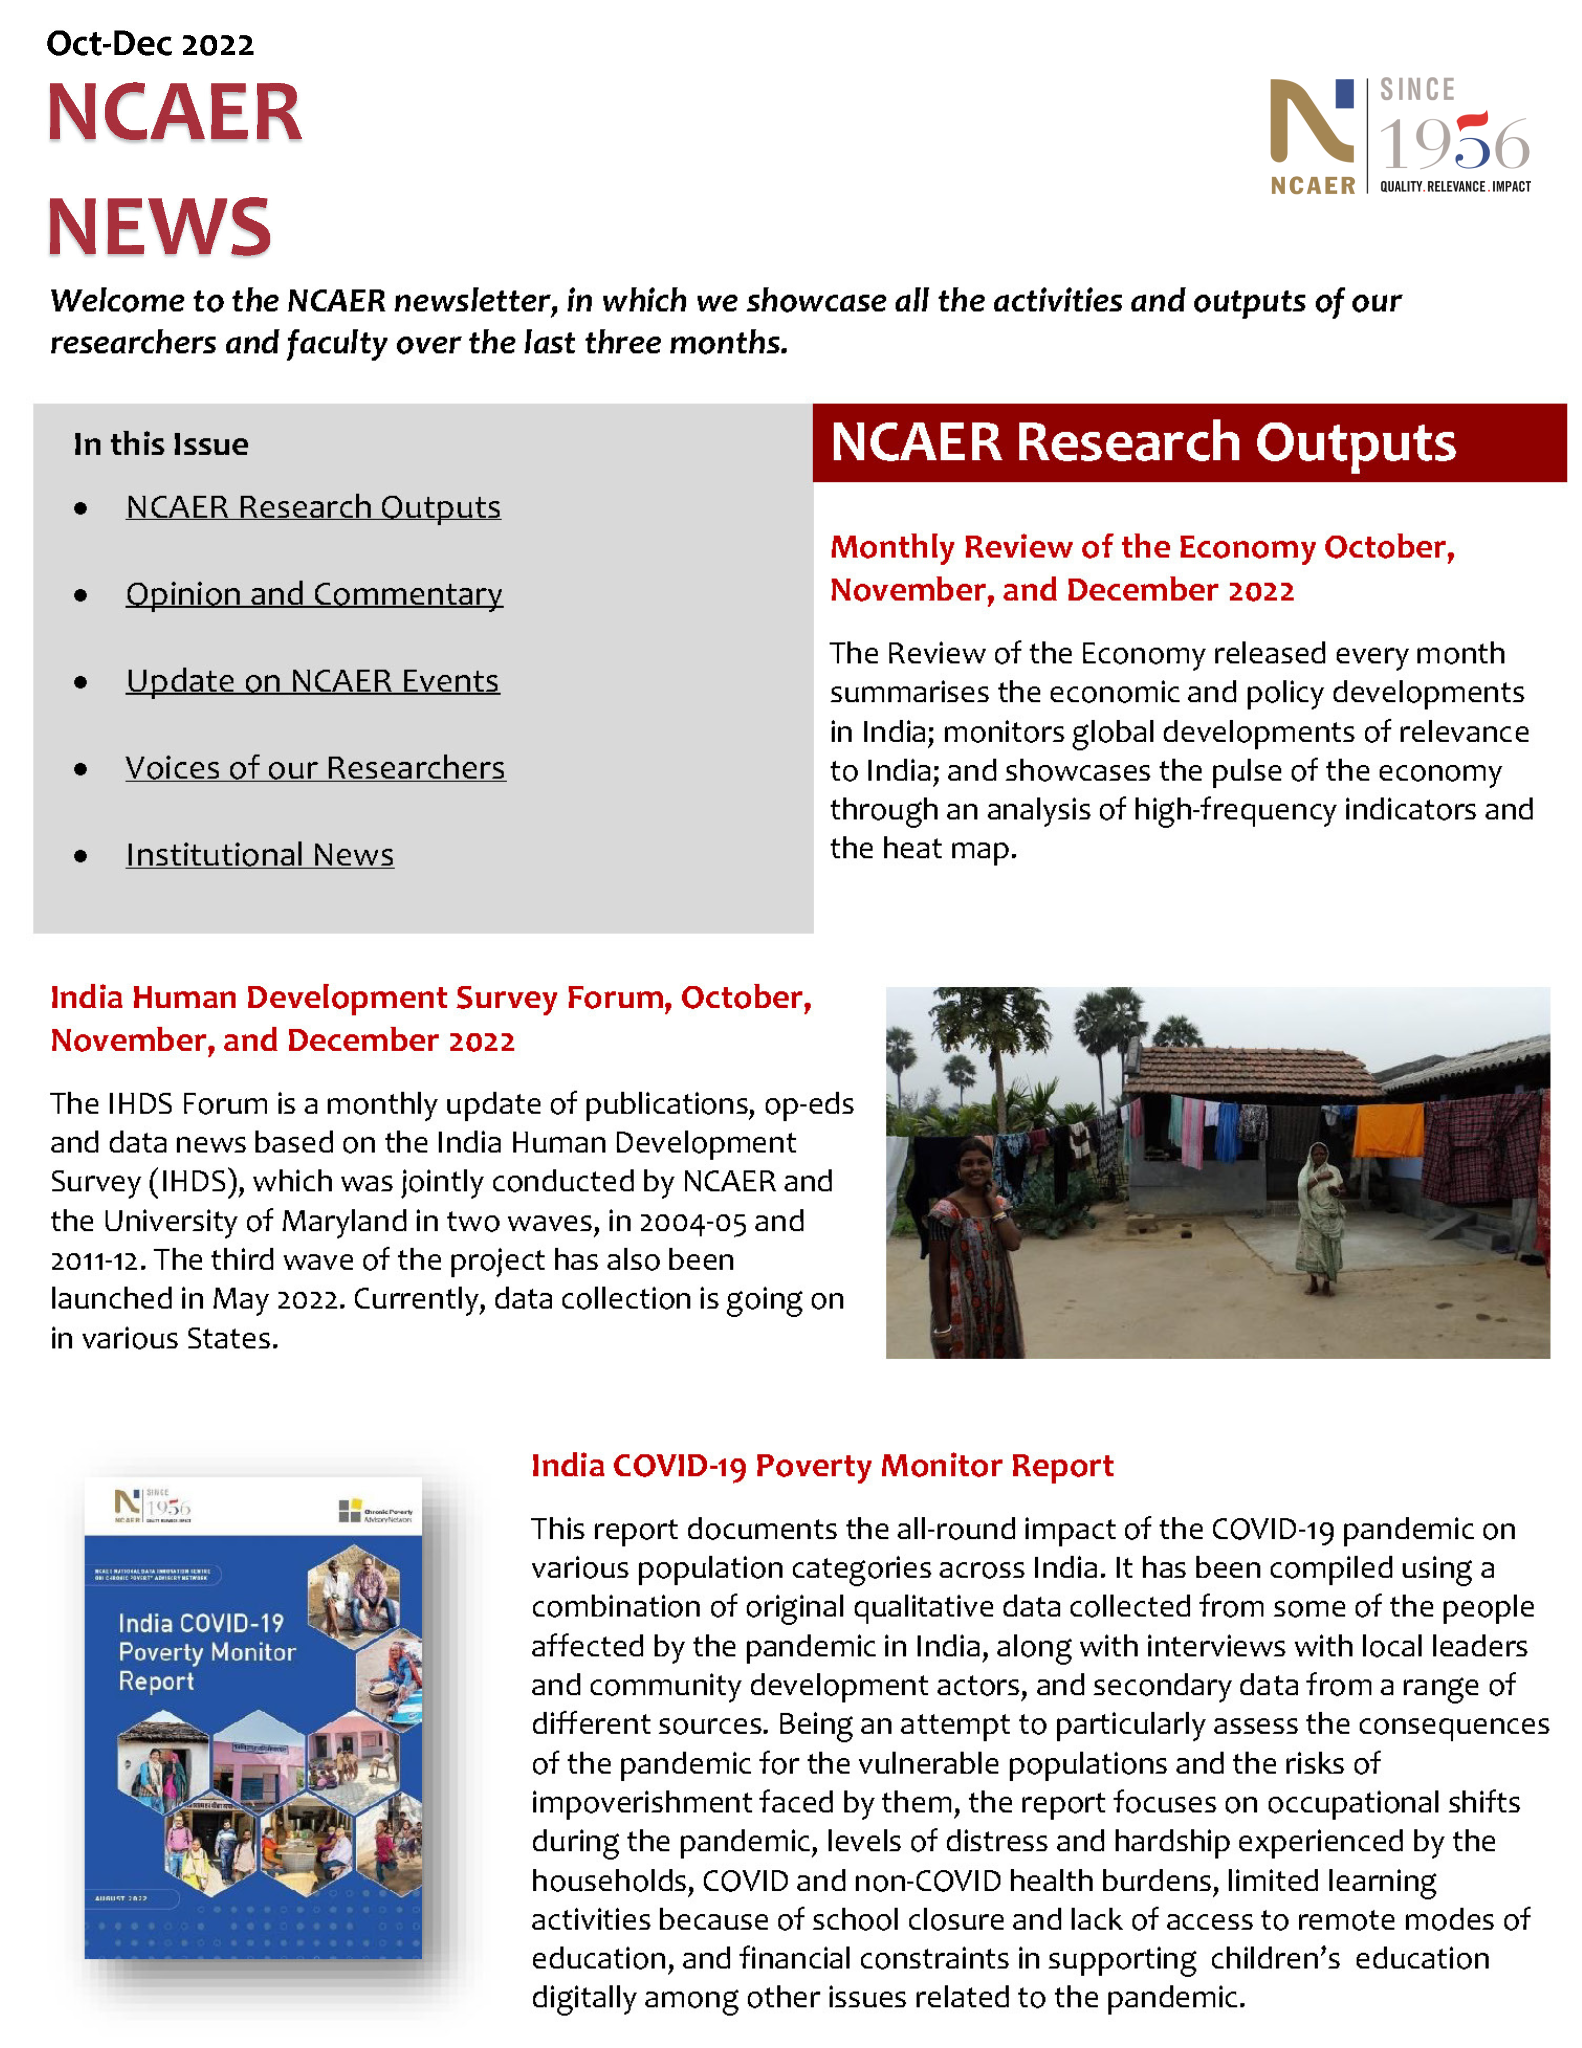 NCAER Newsletter Oct-Dec 2022